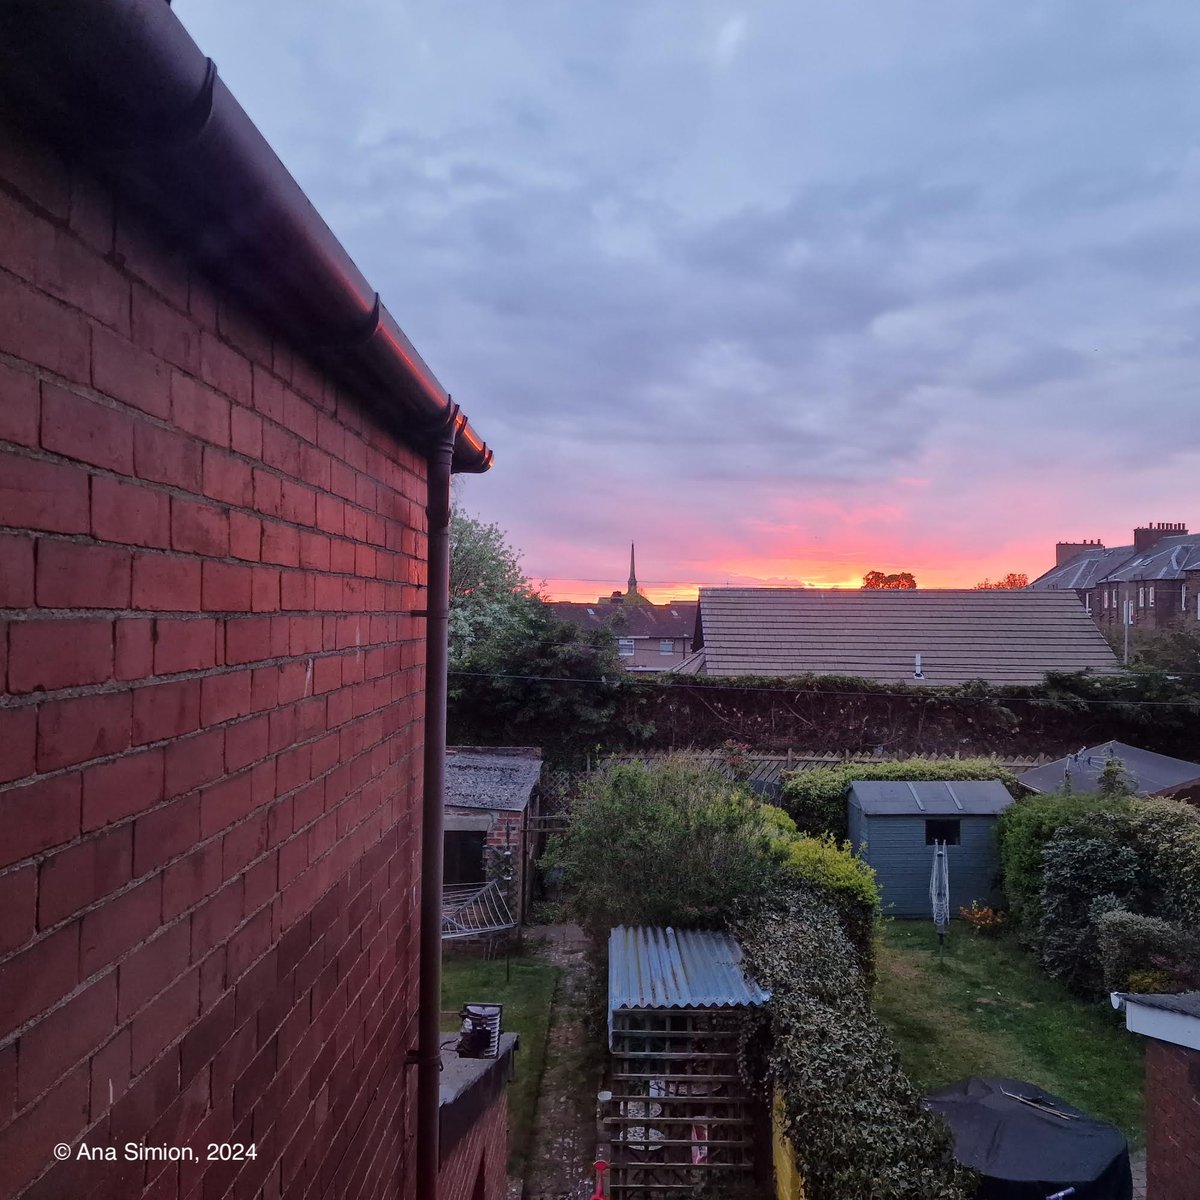 A Spring Sunset.

#ShotOnSnapdragon #Snapdragon #SnapdragonInsider #sunset #photographer #photographers #Scotland @Snapdragon